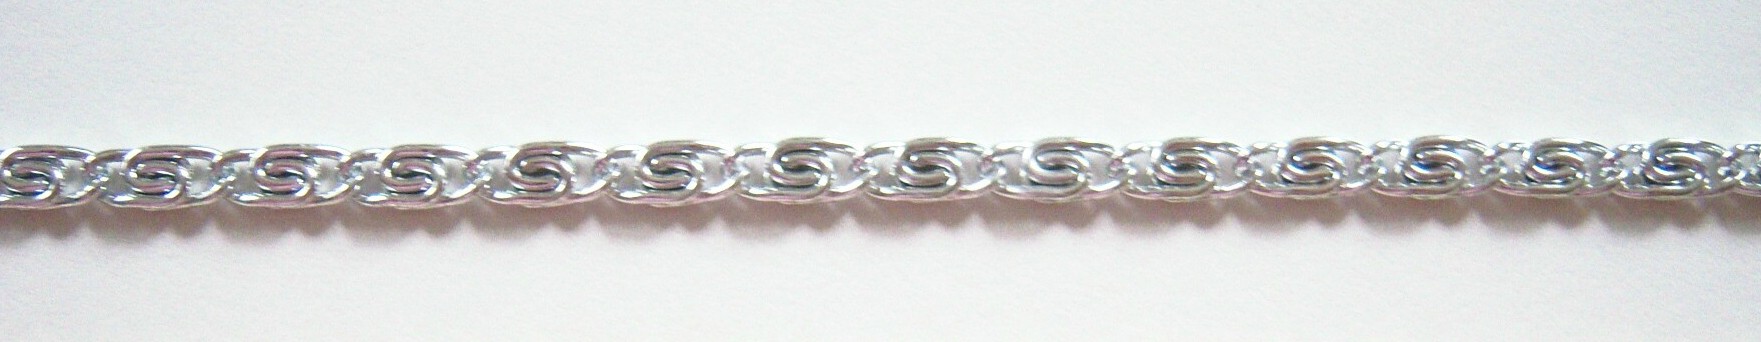 Silver Aluminum Chain